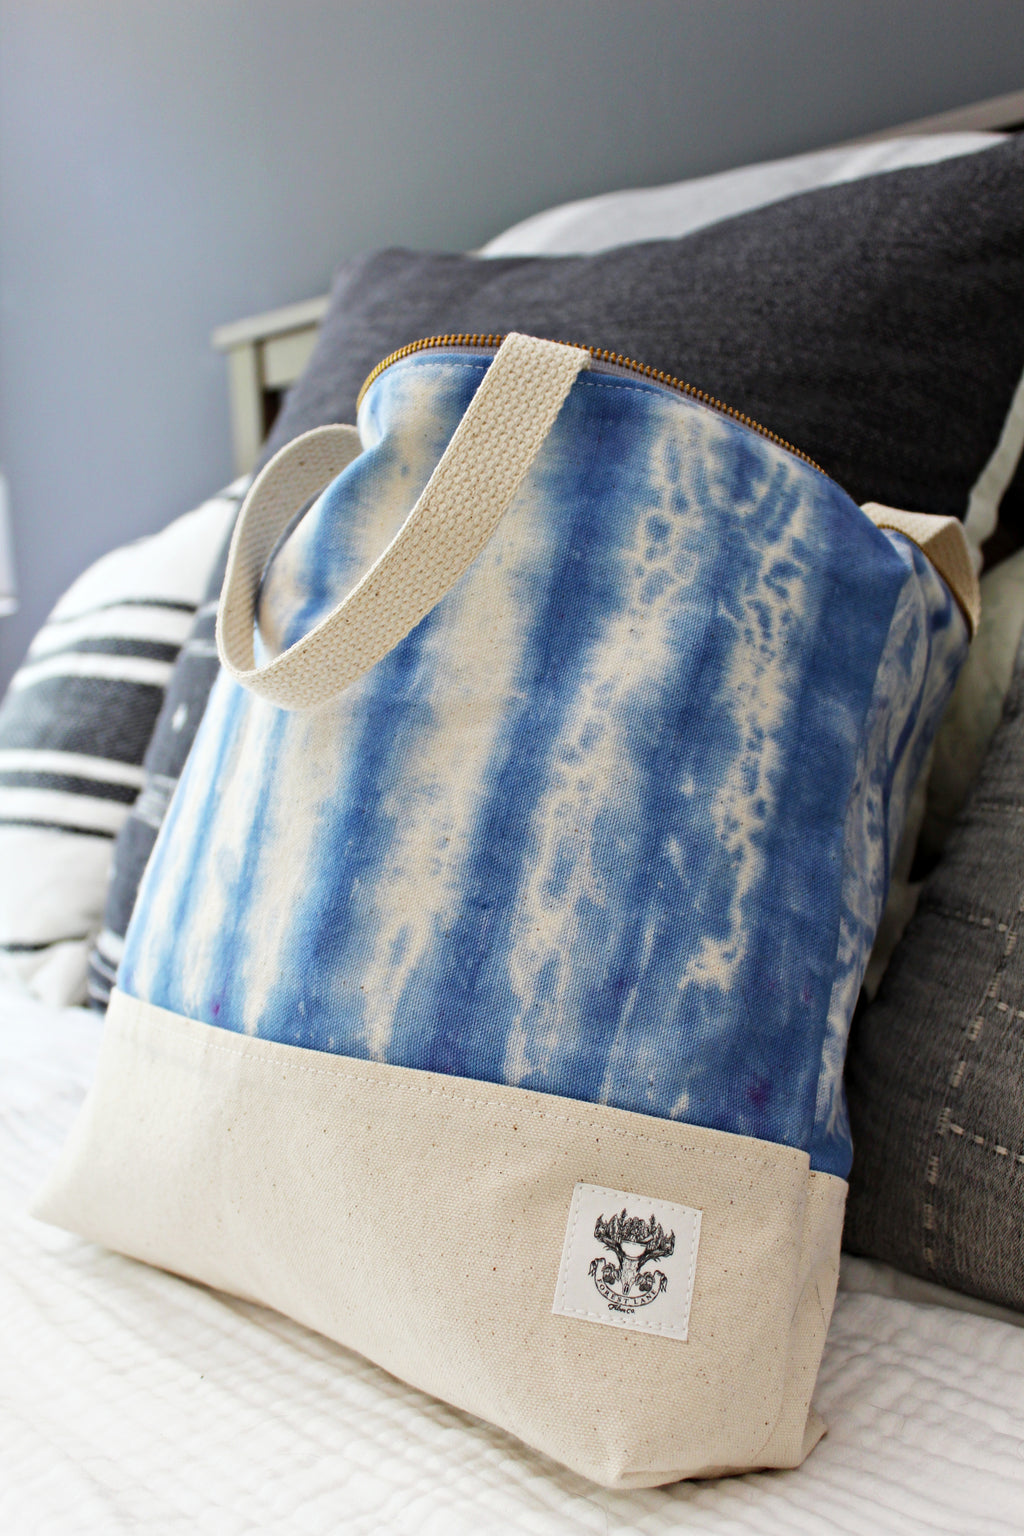 Sky Blue 1 - Sweater-Sized Project Bag - Shibori Tie-Dyed